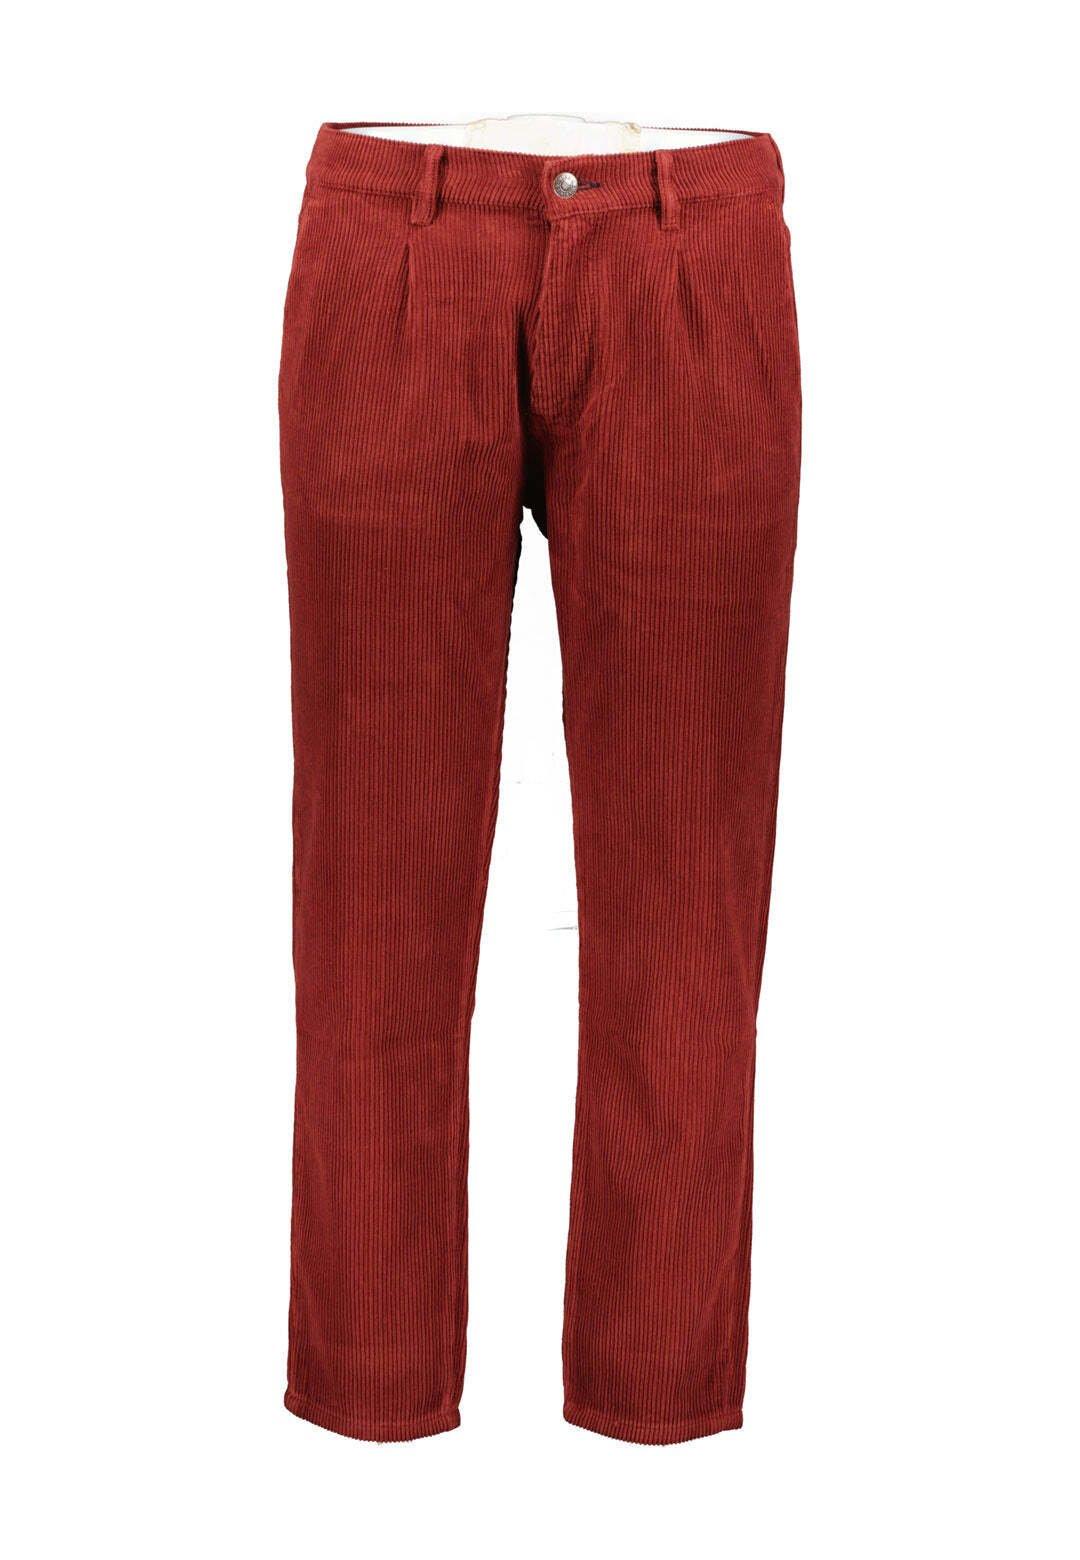 Hosen Pants-corduroy Herren Rot Bunt W34 von Colours & Sons